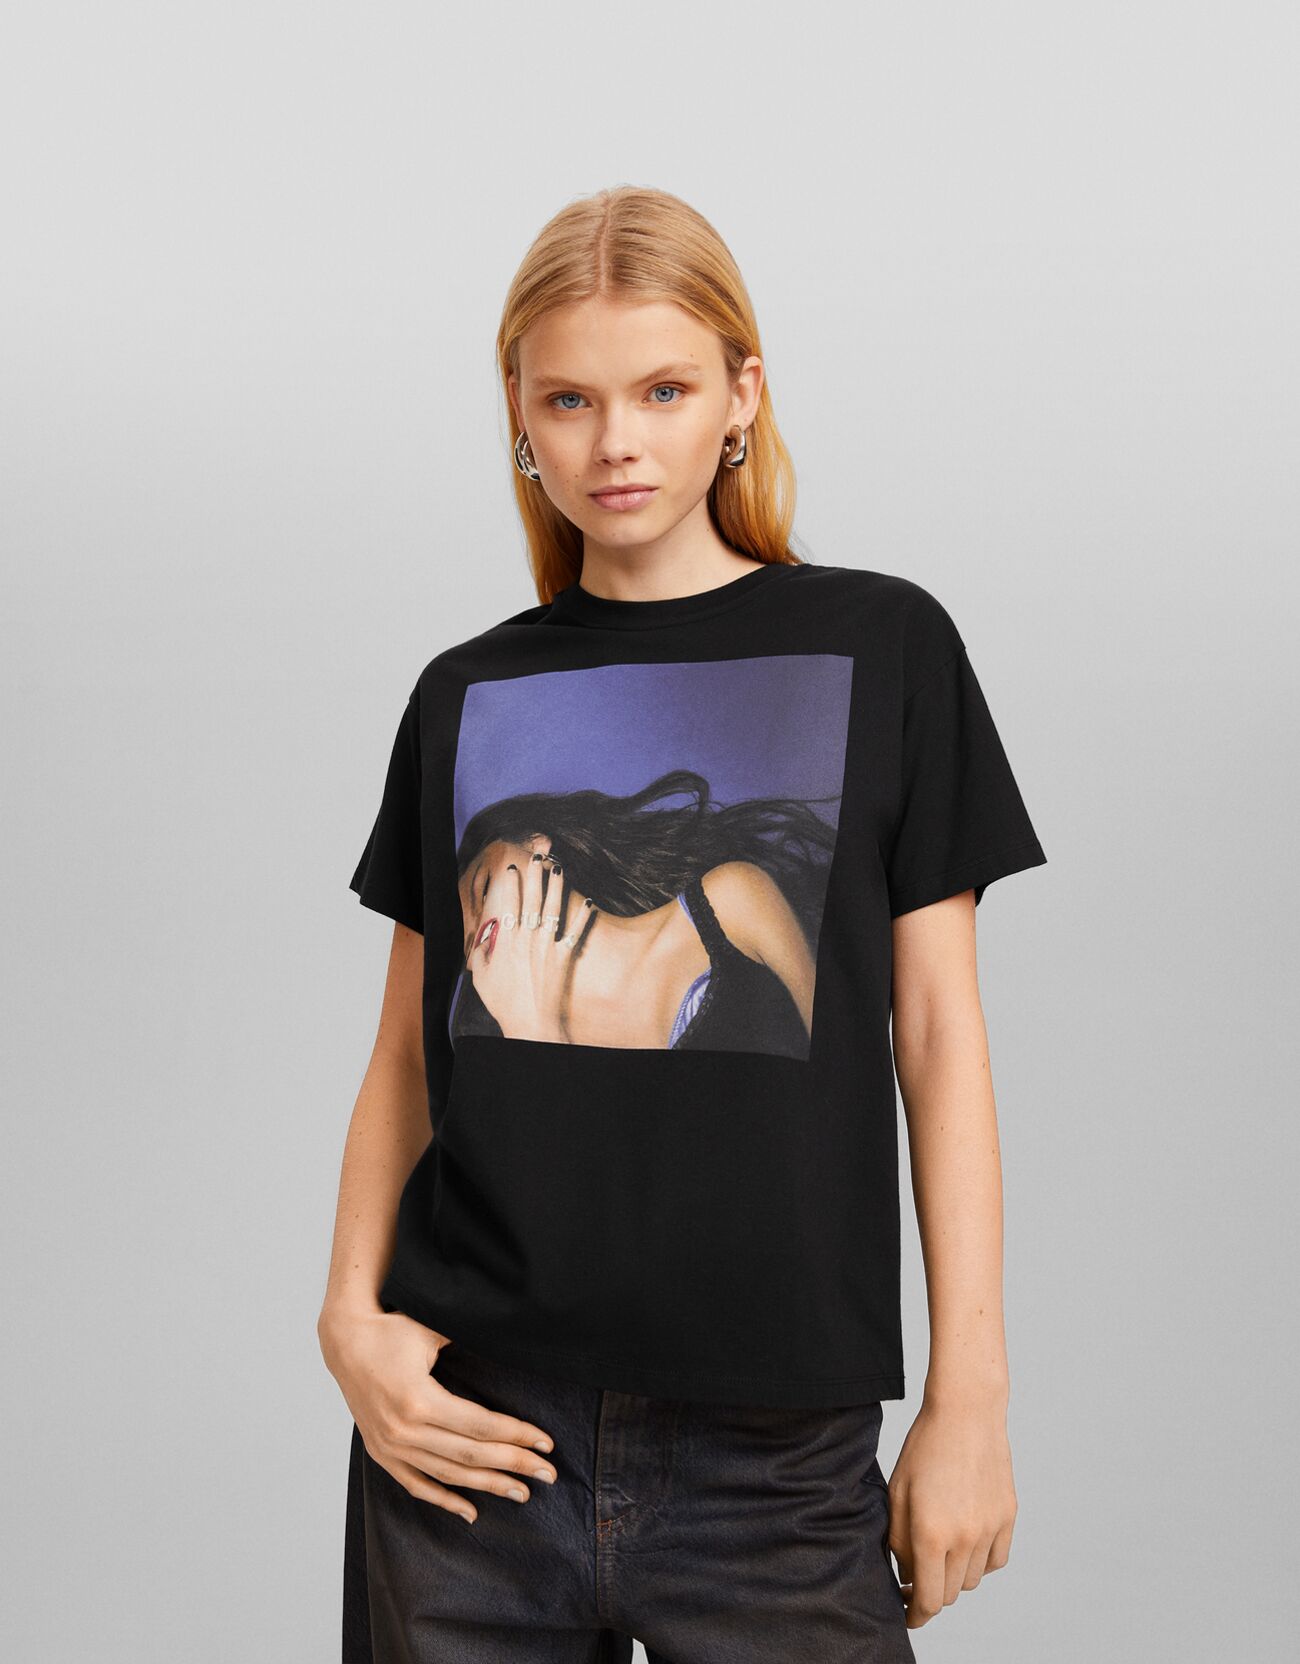 Olivia Rodrigo Merch Tshirt Crewneck Short Sleeve Black Tshirts Men Women  T-shirt Youthful Clothes 